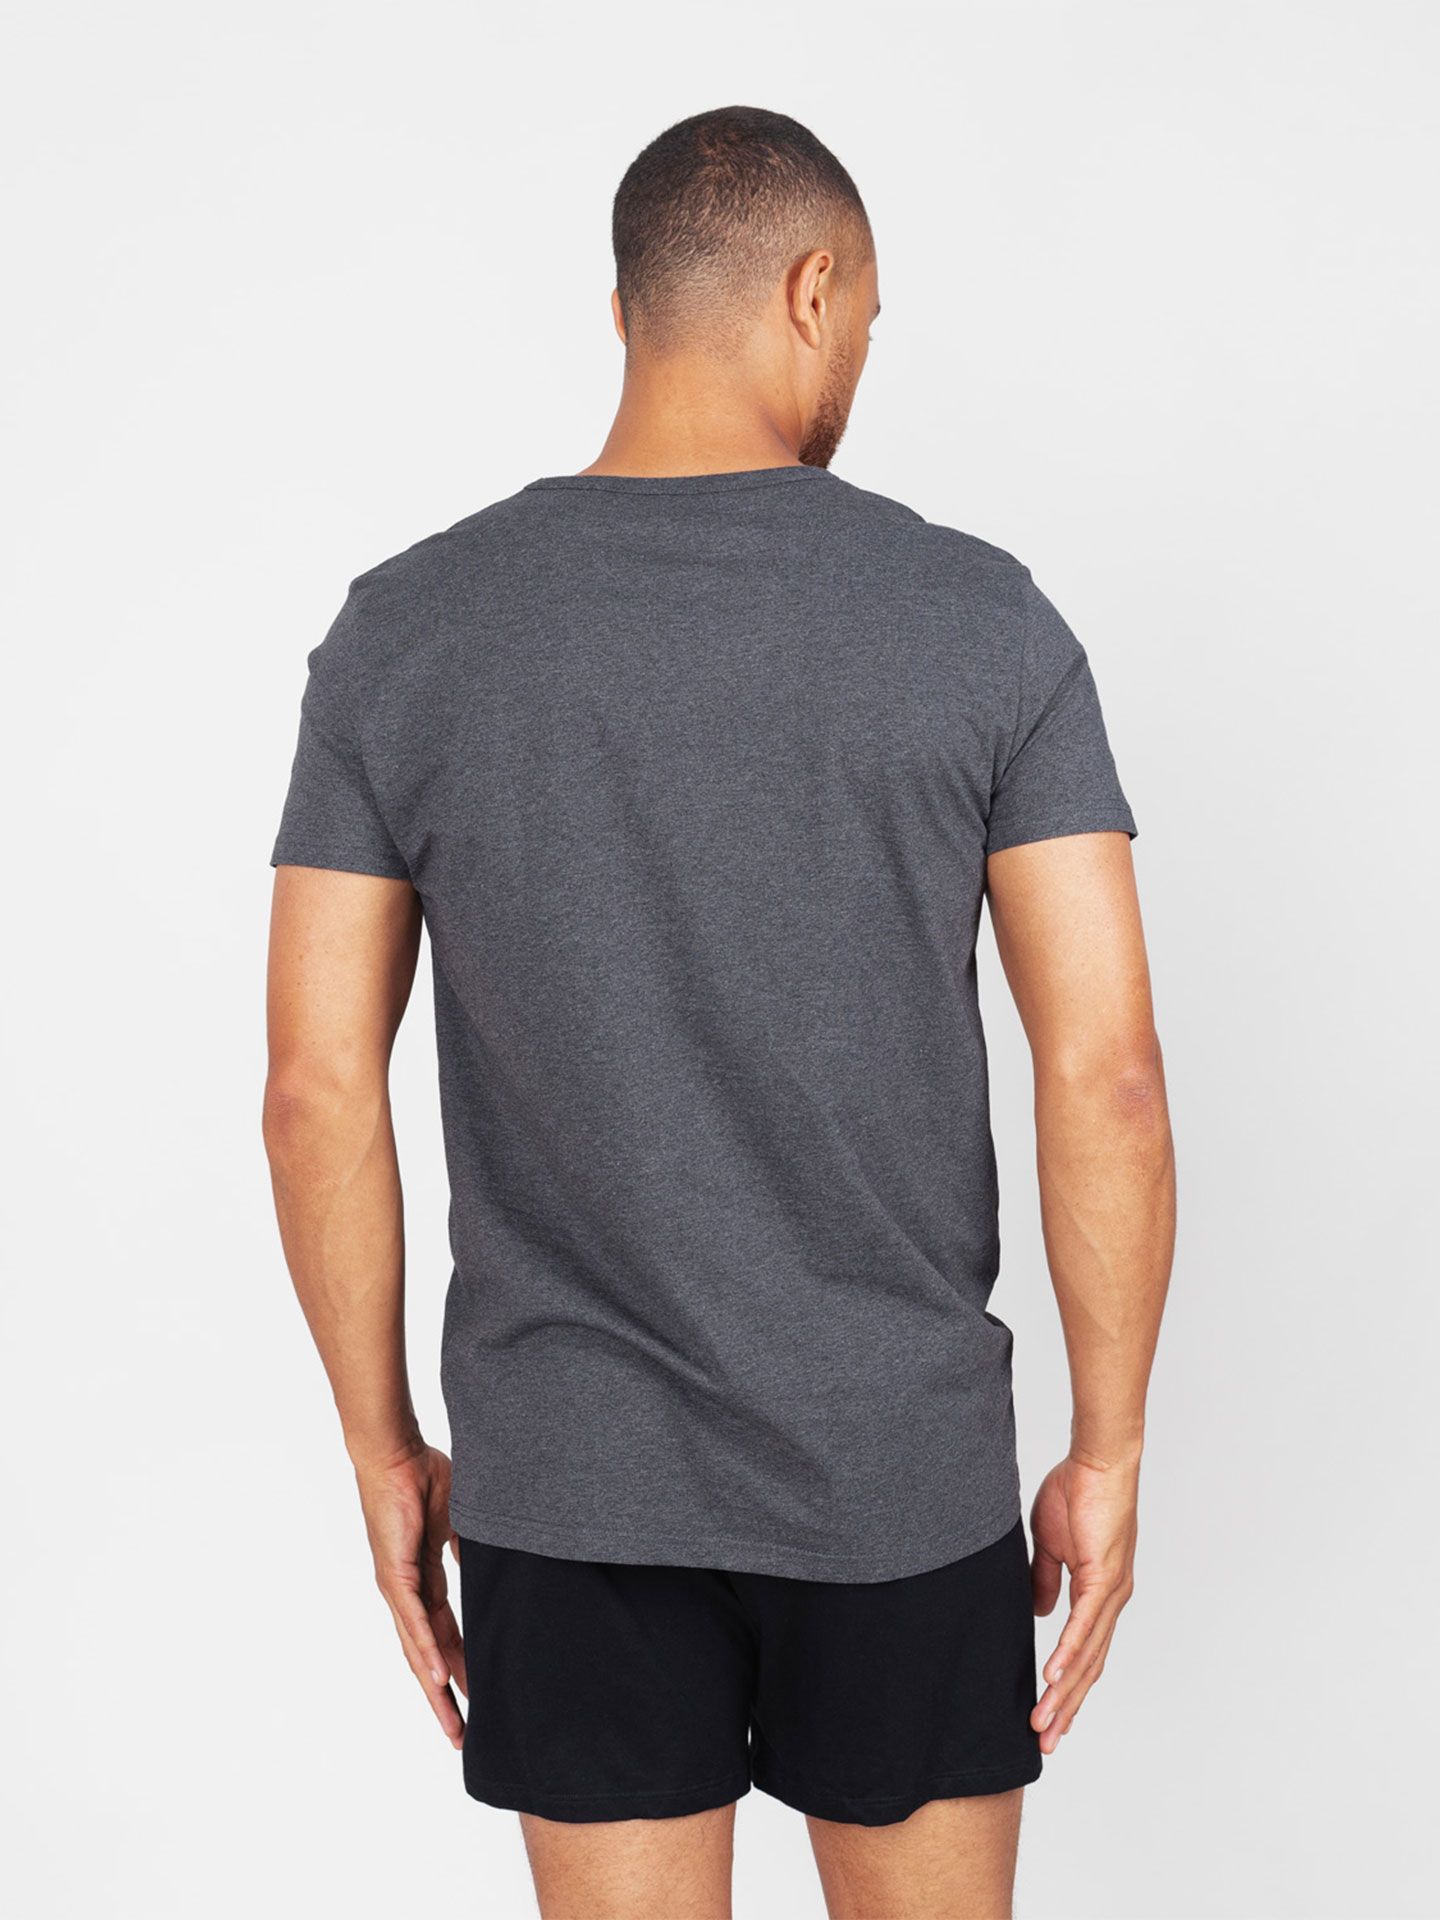 Paul T-Shirt schwarz-melange S